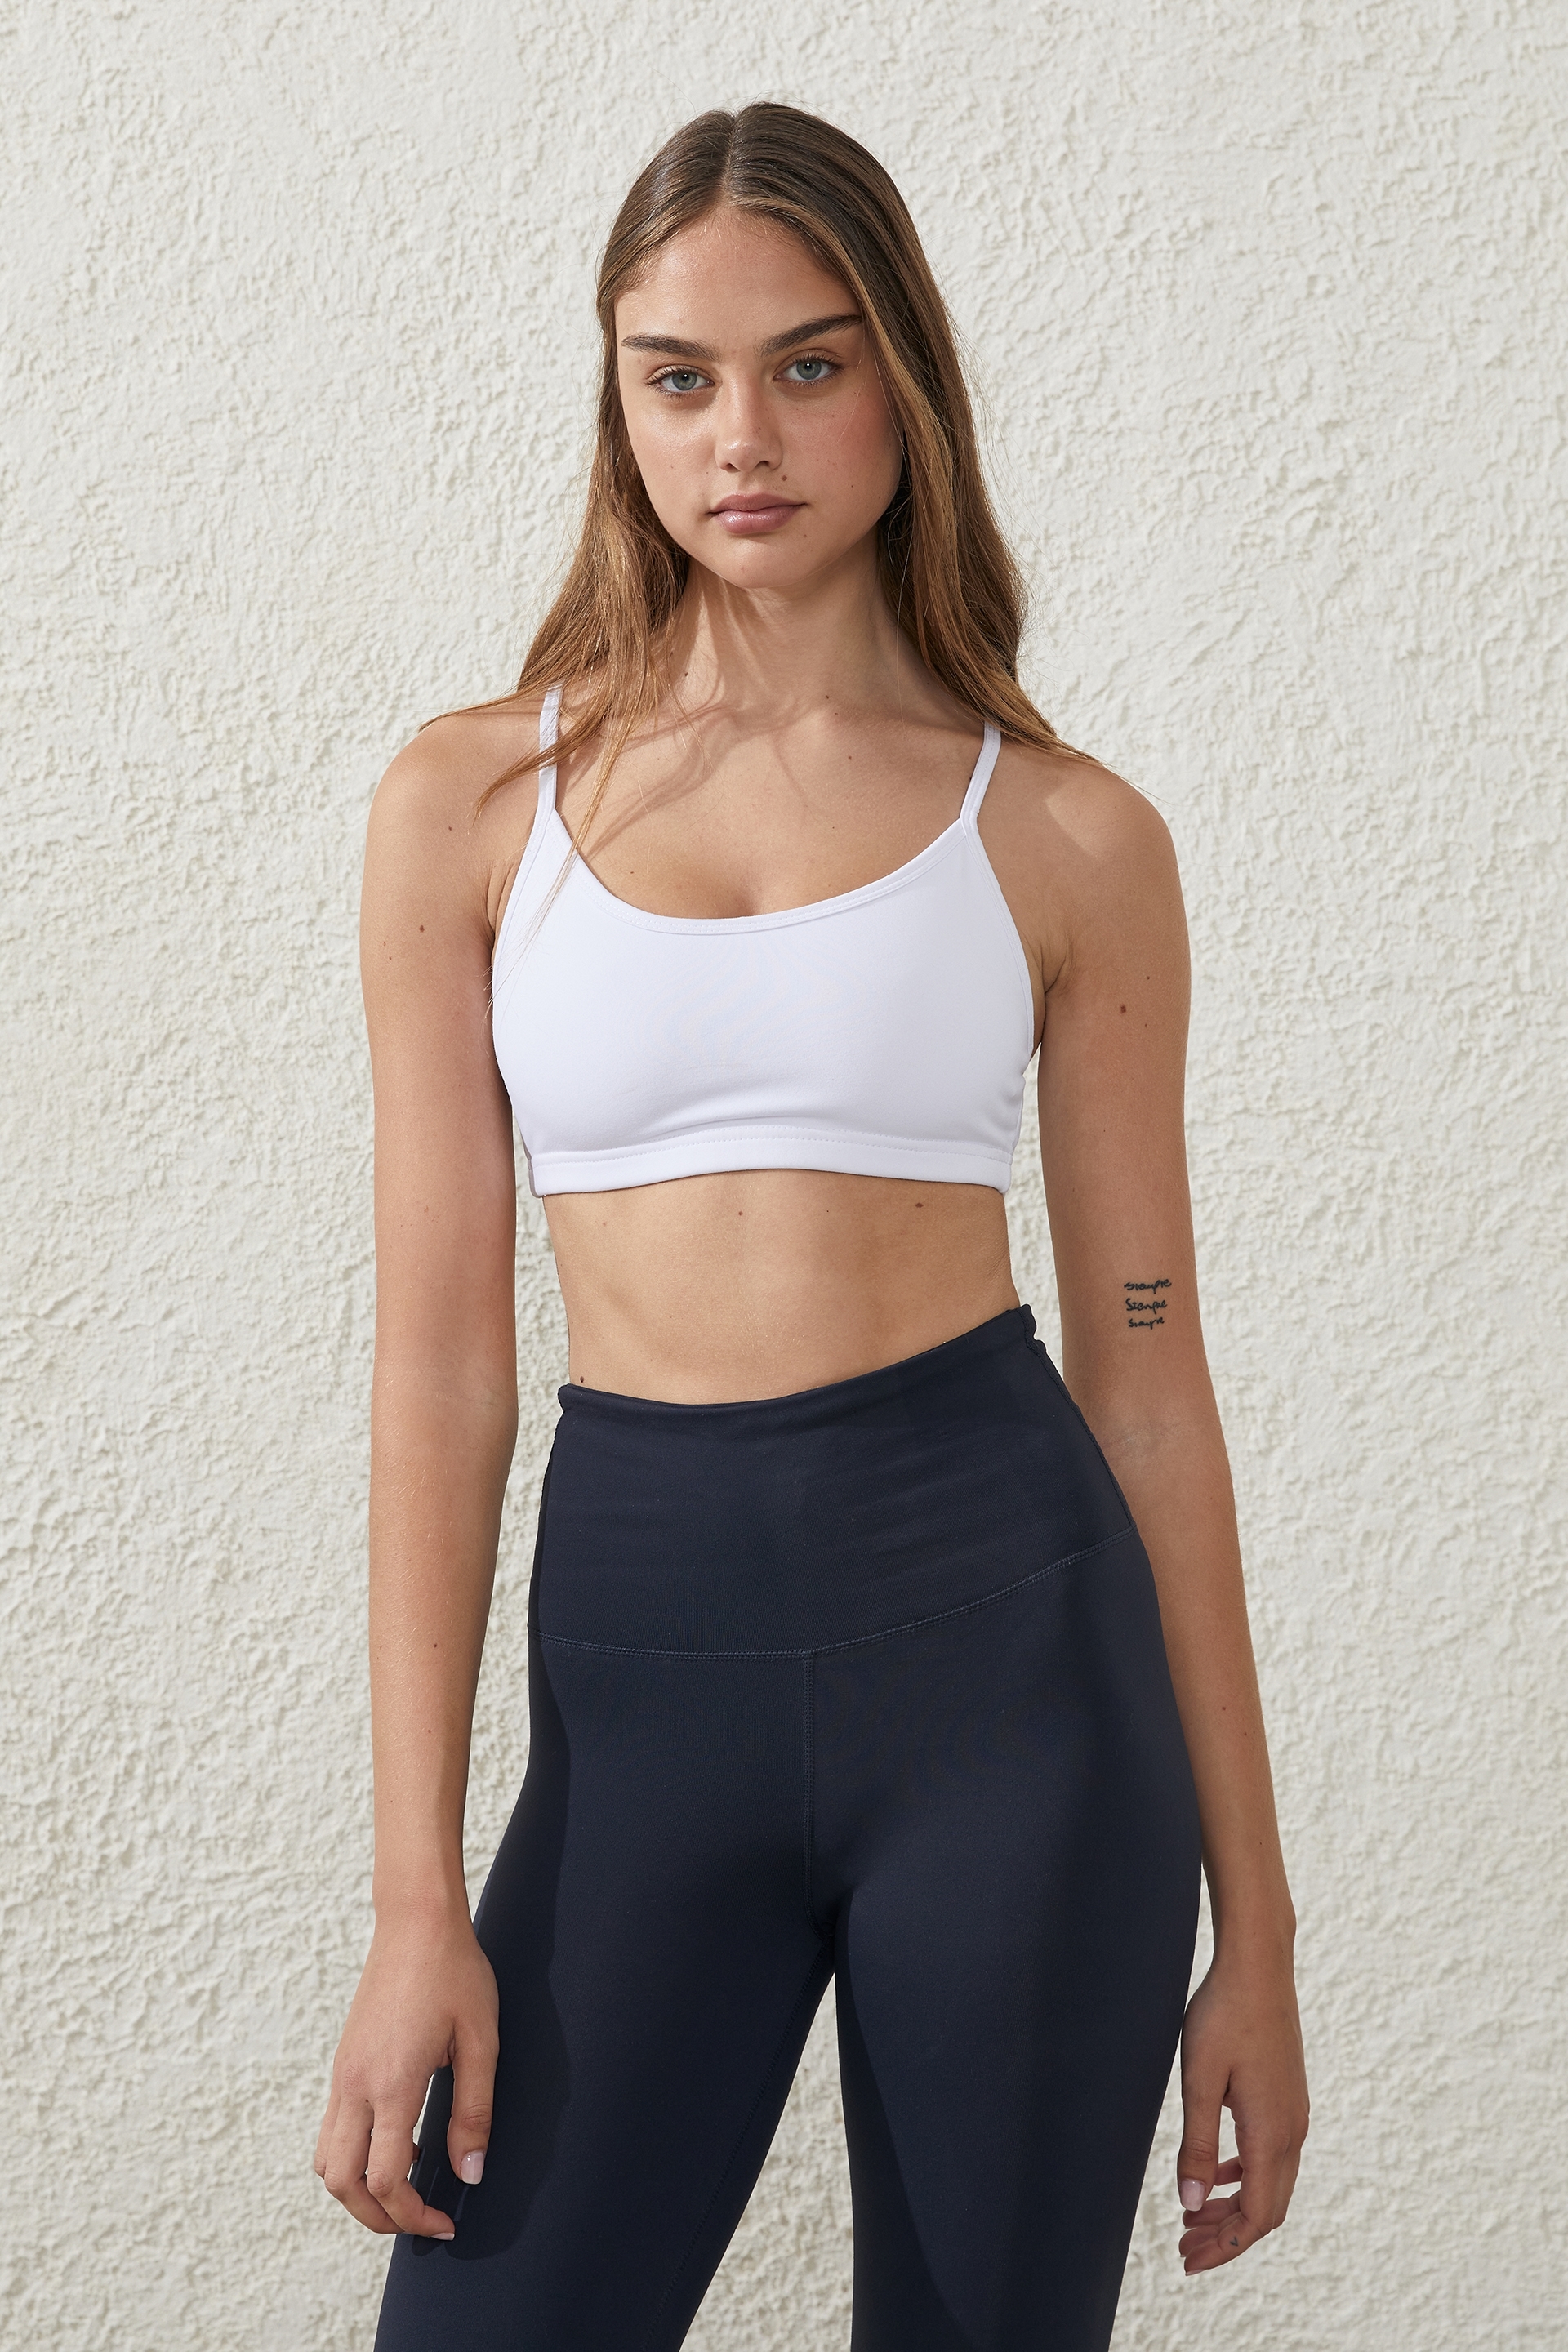 Cotton On Body Workout Yoga Crop - Wire-Free Sports Bra - Spacedye, Small  #8492